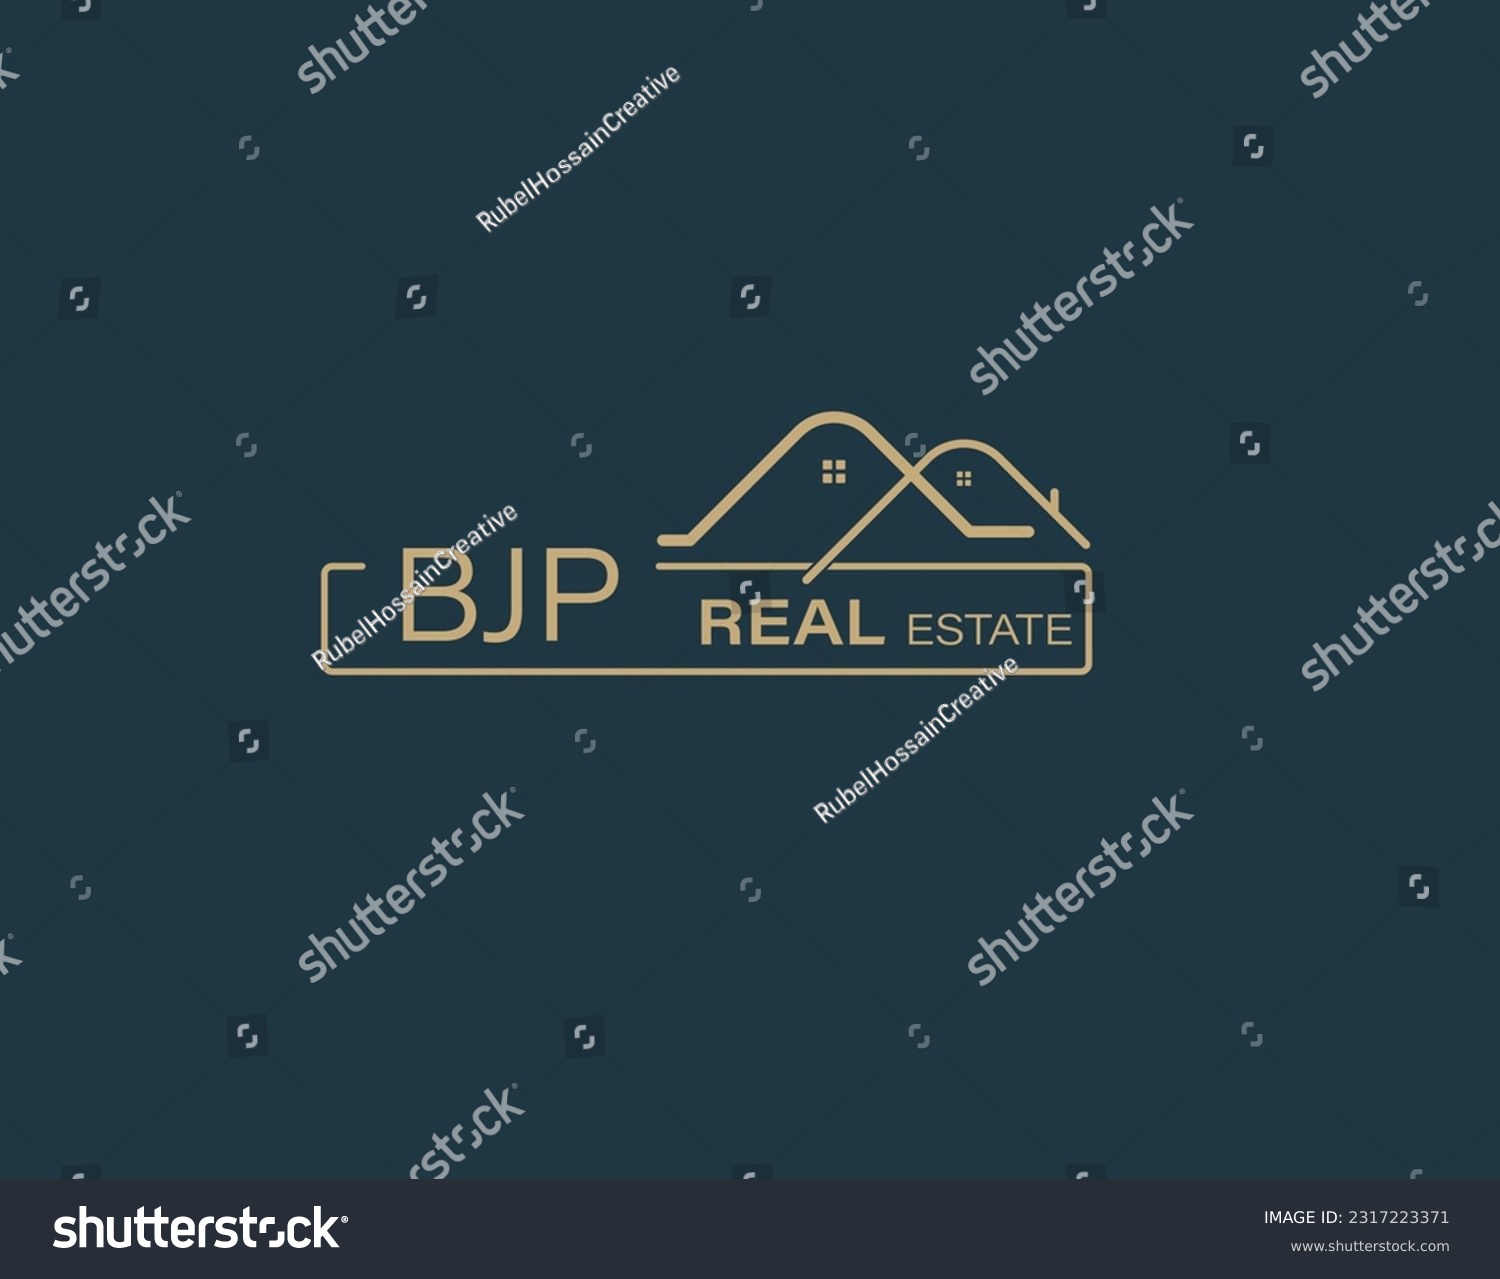 SVG of BJP Real Estate and Consultants Logo Design Vectors images. Luxury Real Estate Logo Design svg